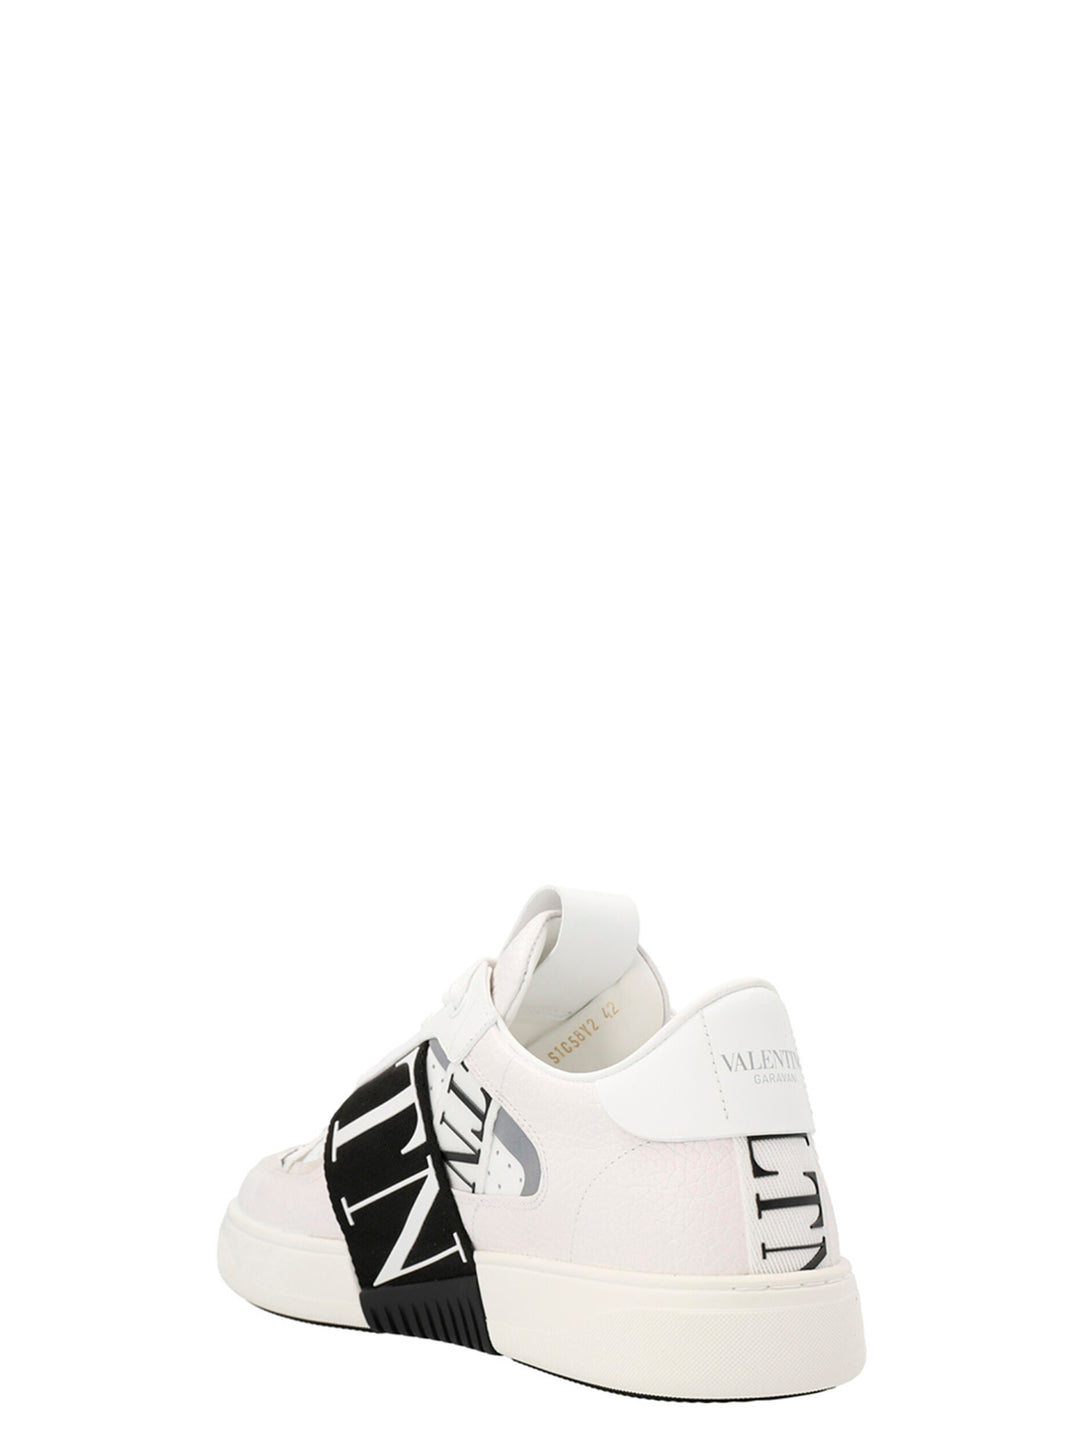 Valentino Garavani Vltn Sneakers Bianco/Nero